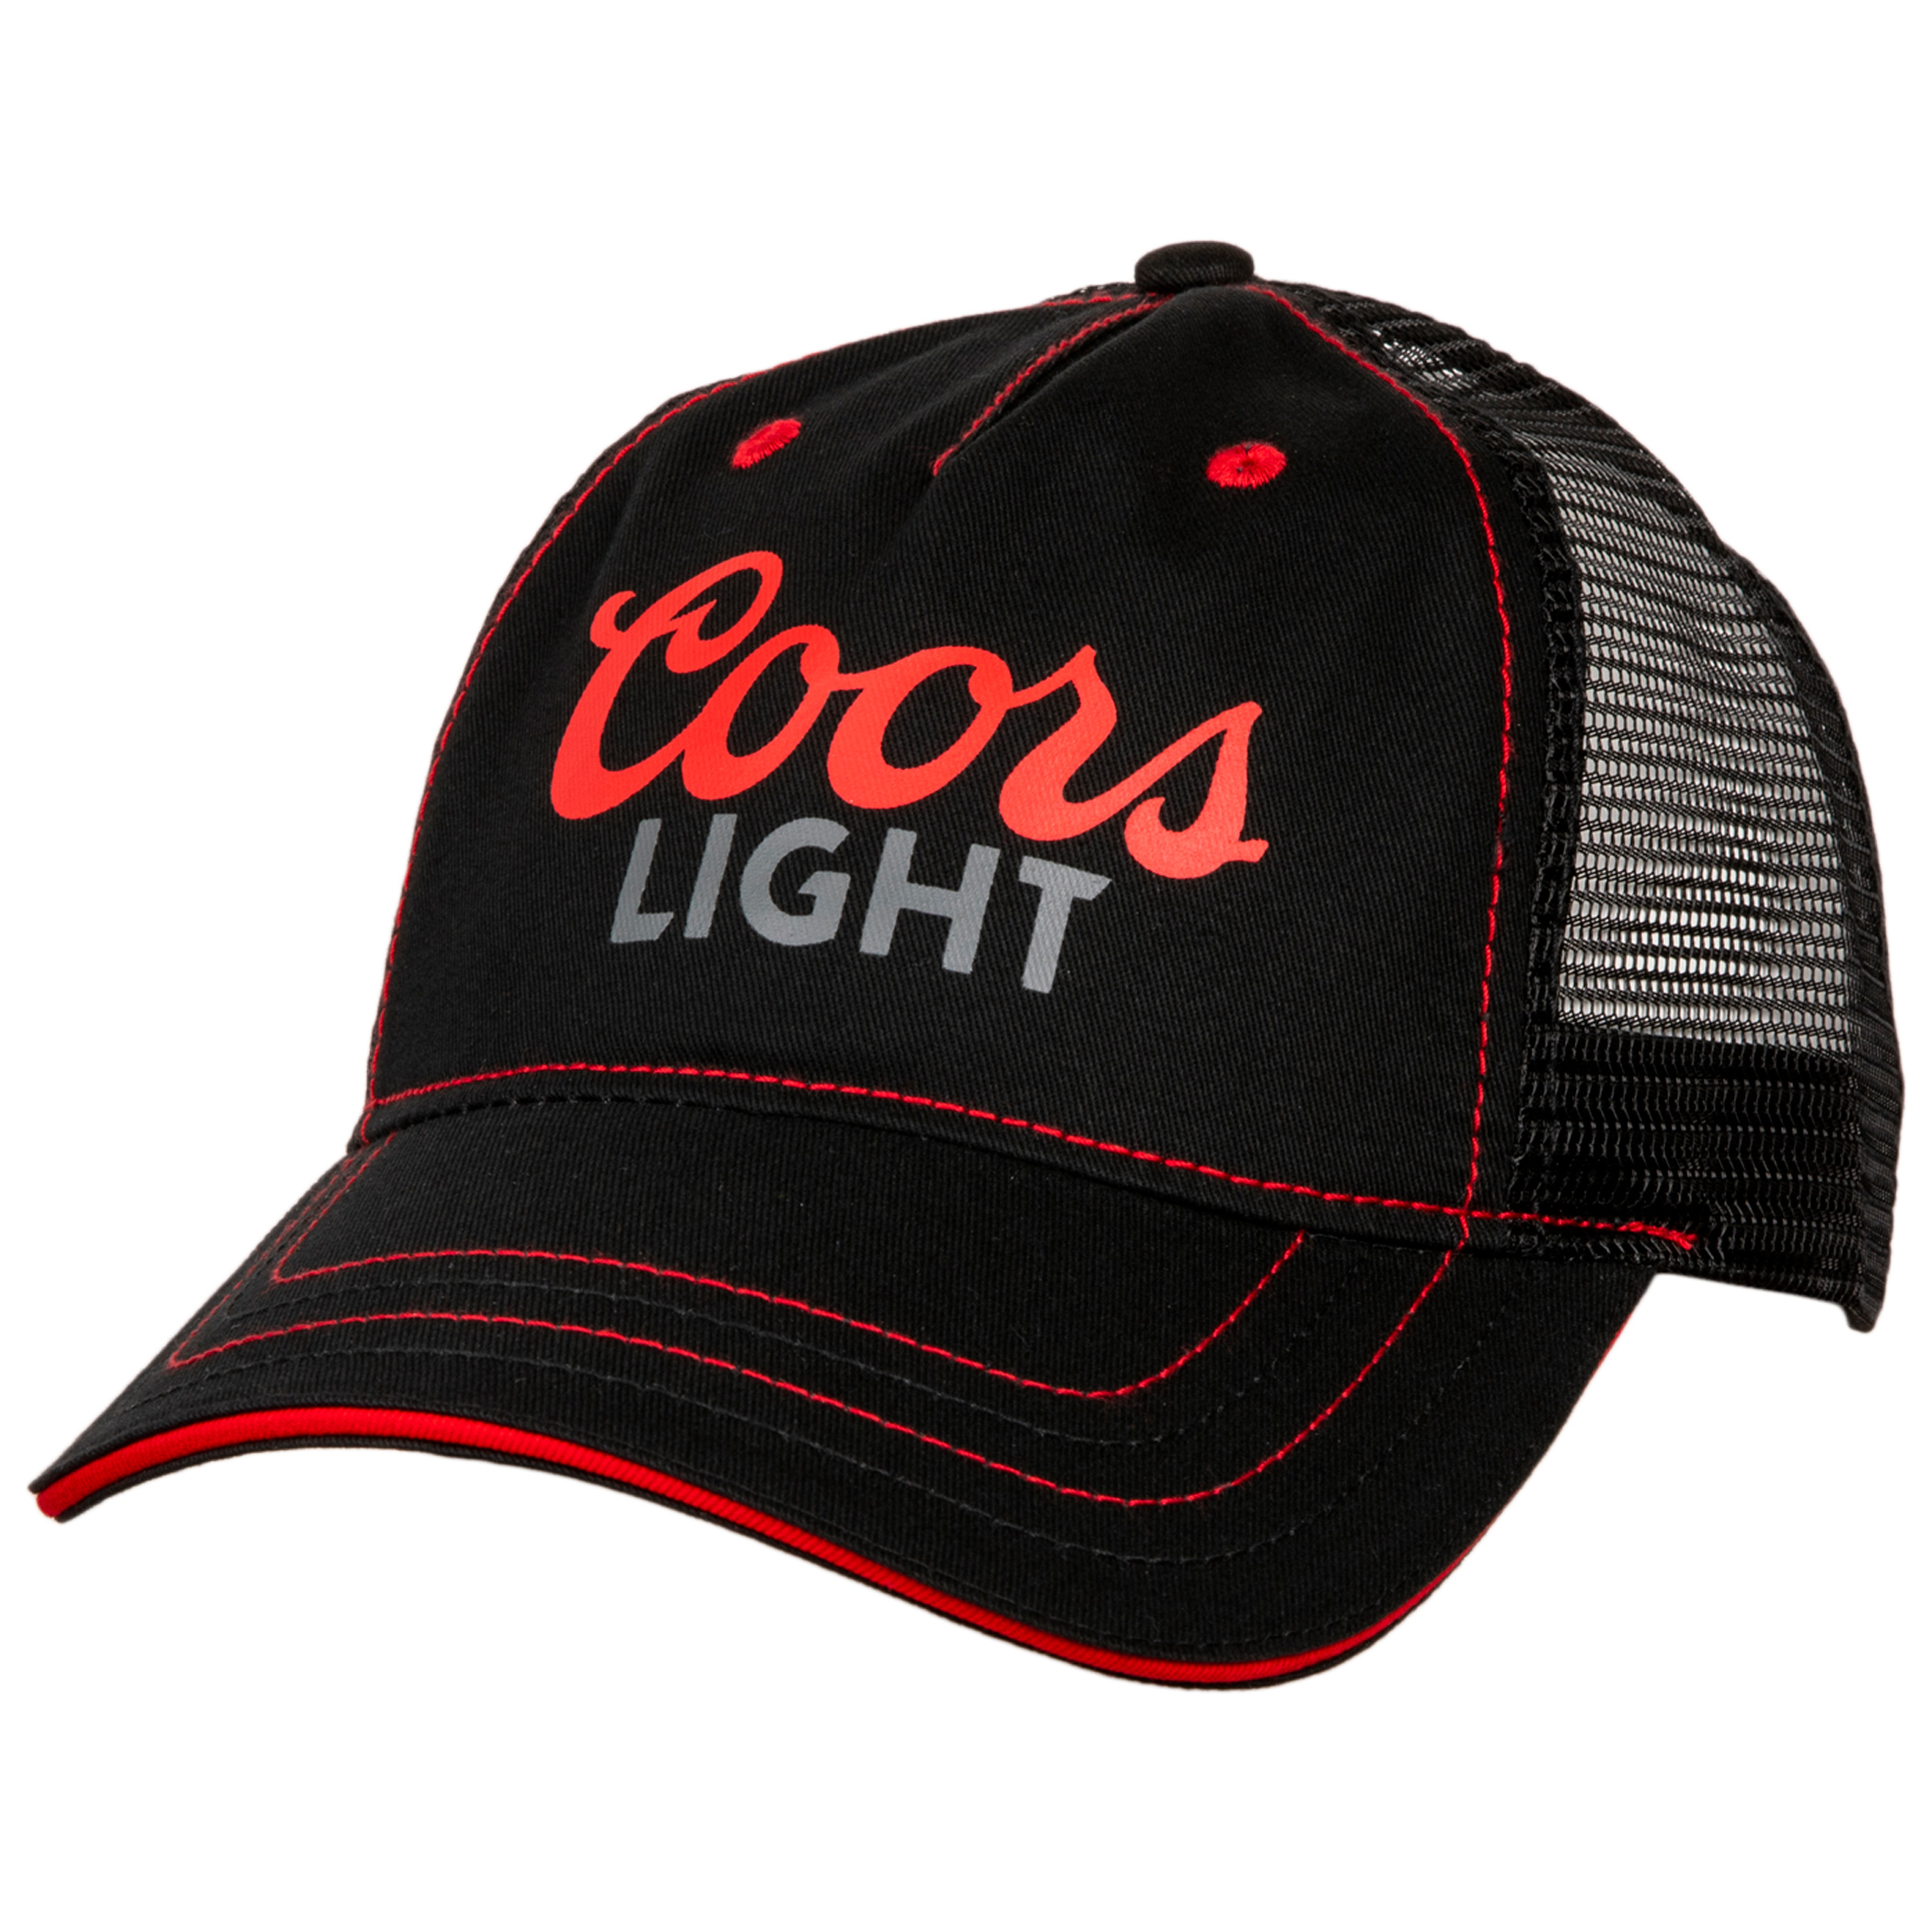 Coors Light Logo Adjustable Velcro Mesh Trucker Hat